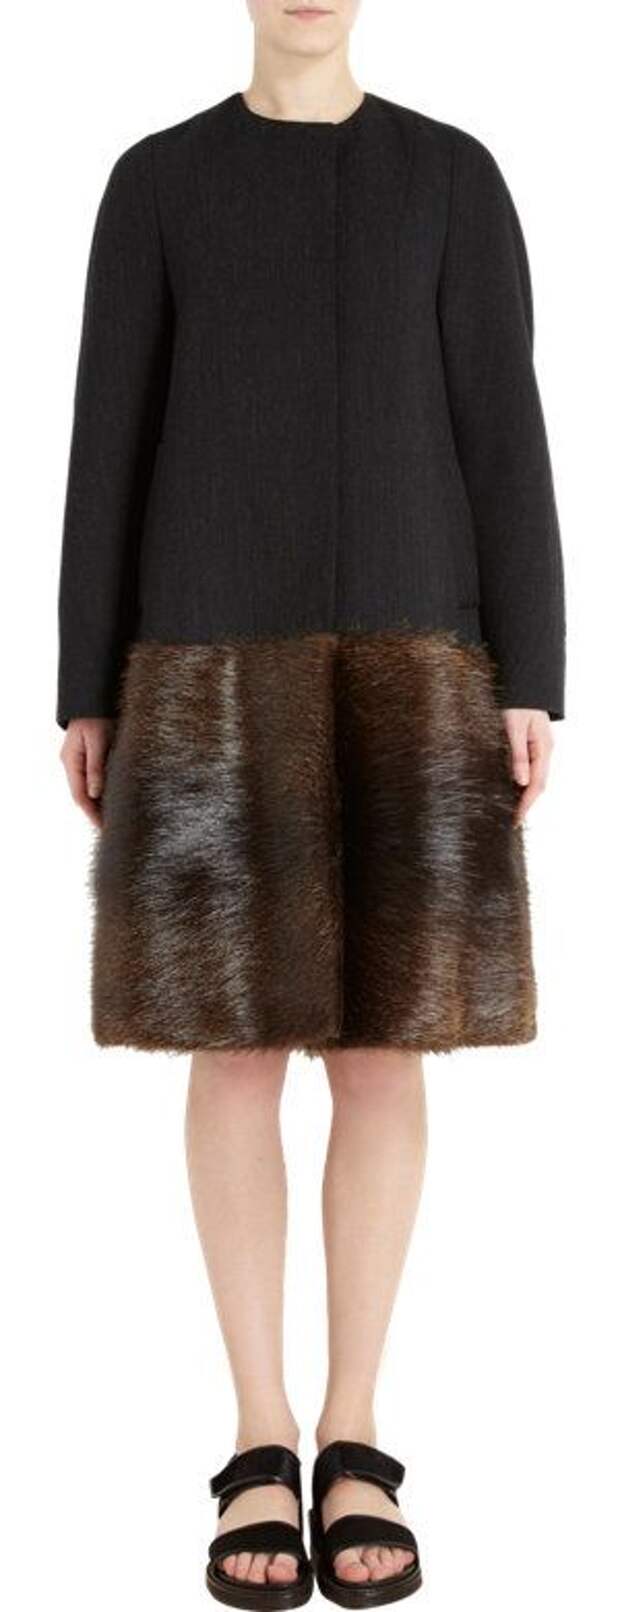 Marni Fur Bottom Coat at Barneys.com: 